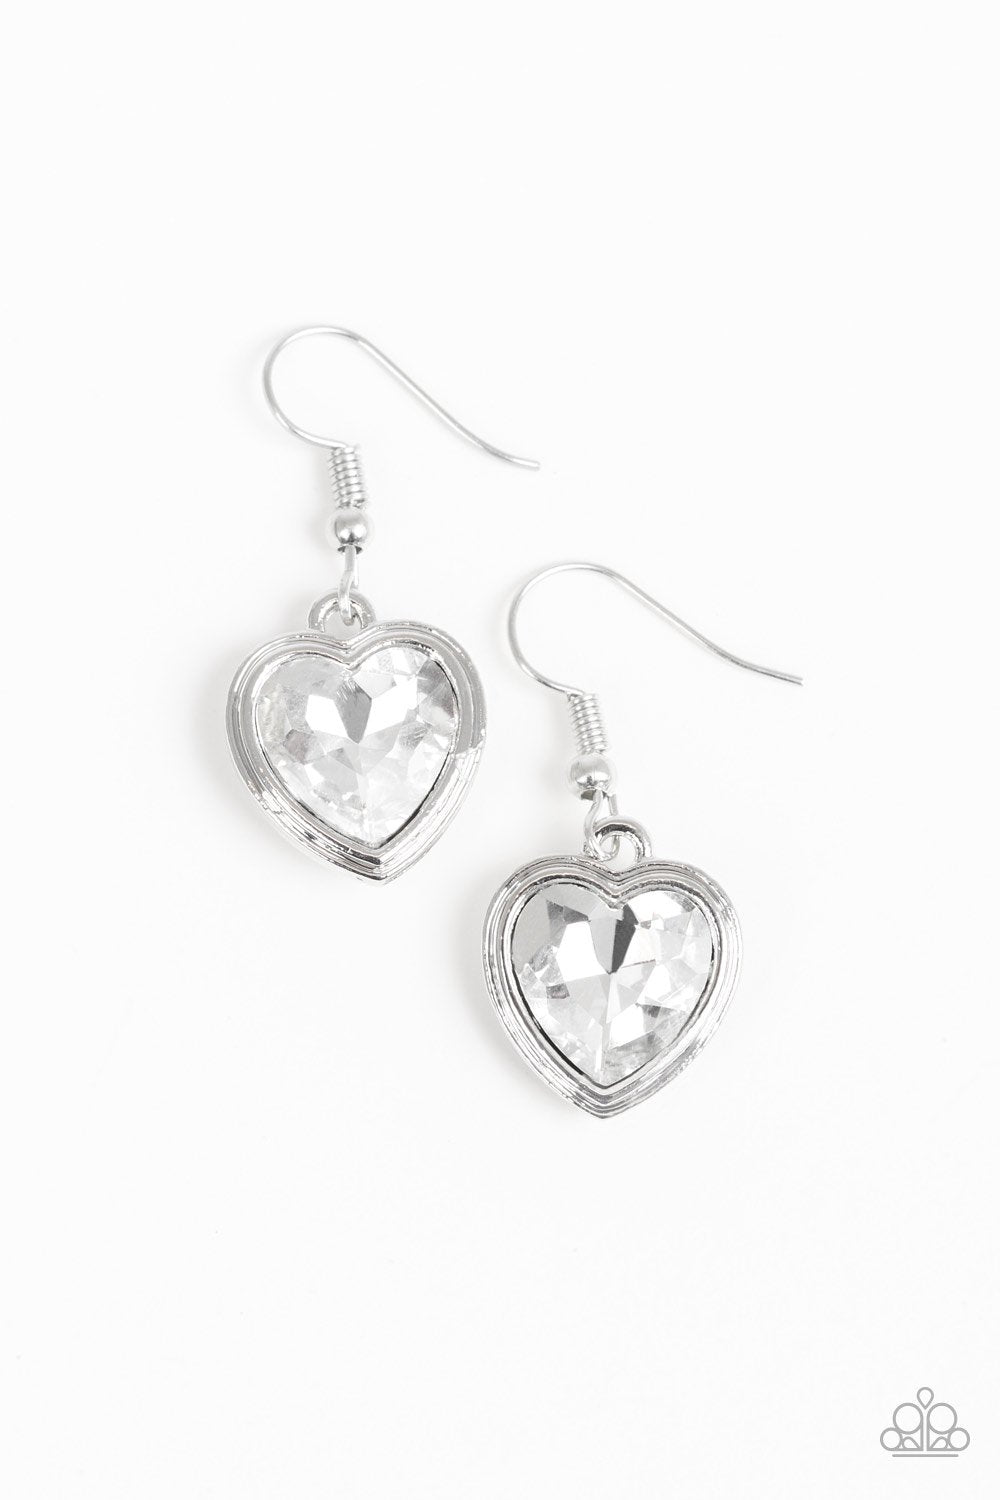 Real Romance White Rhinestone Heart Earrings - Paparazzi Accessories-CarasShop.com - $5 Jewelry by Cara Jewels